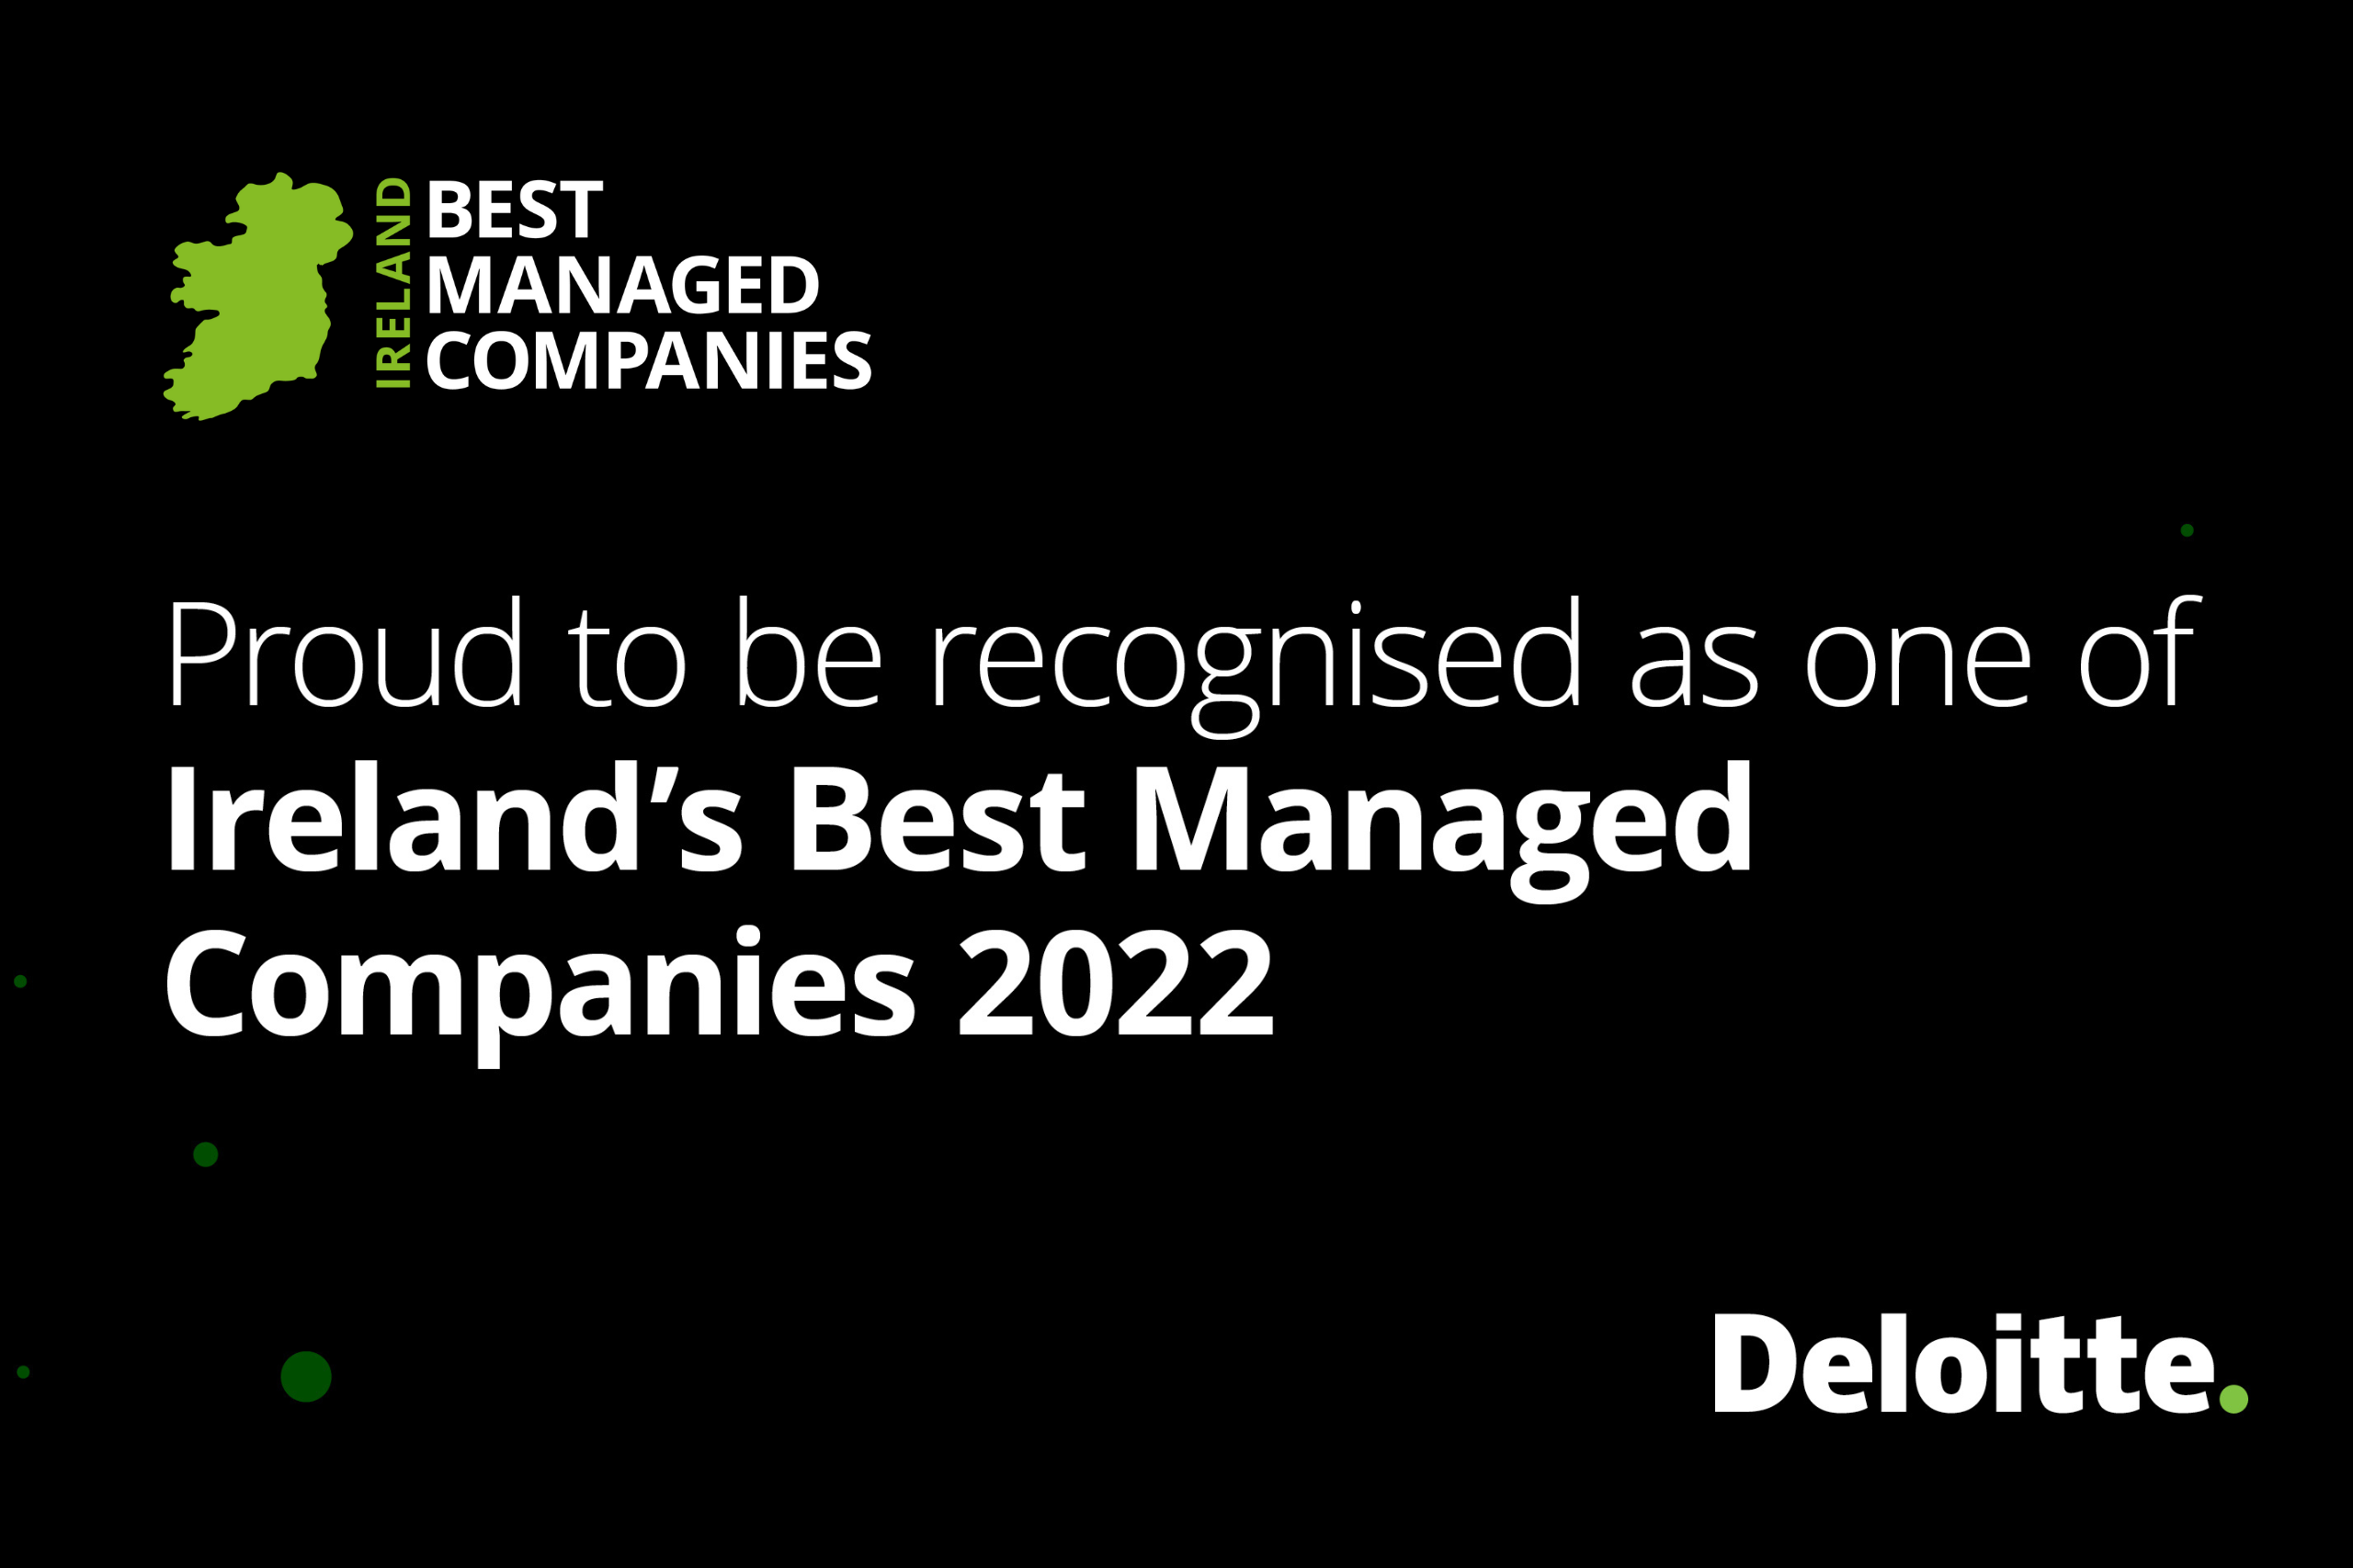 Deloitte Ireland's Best Managed Companies 2022